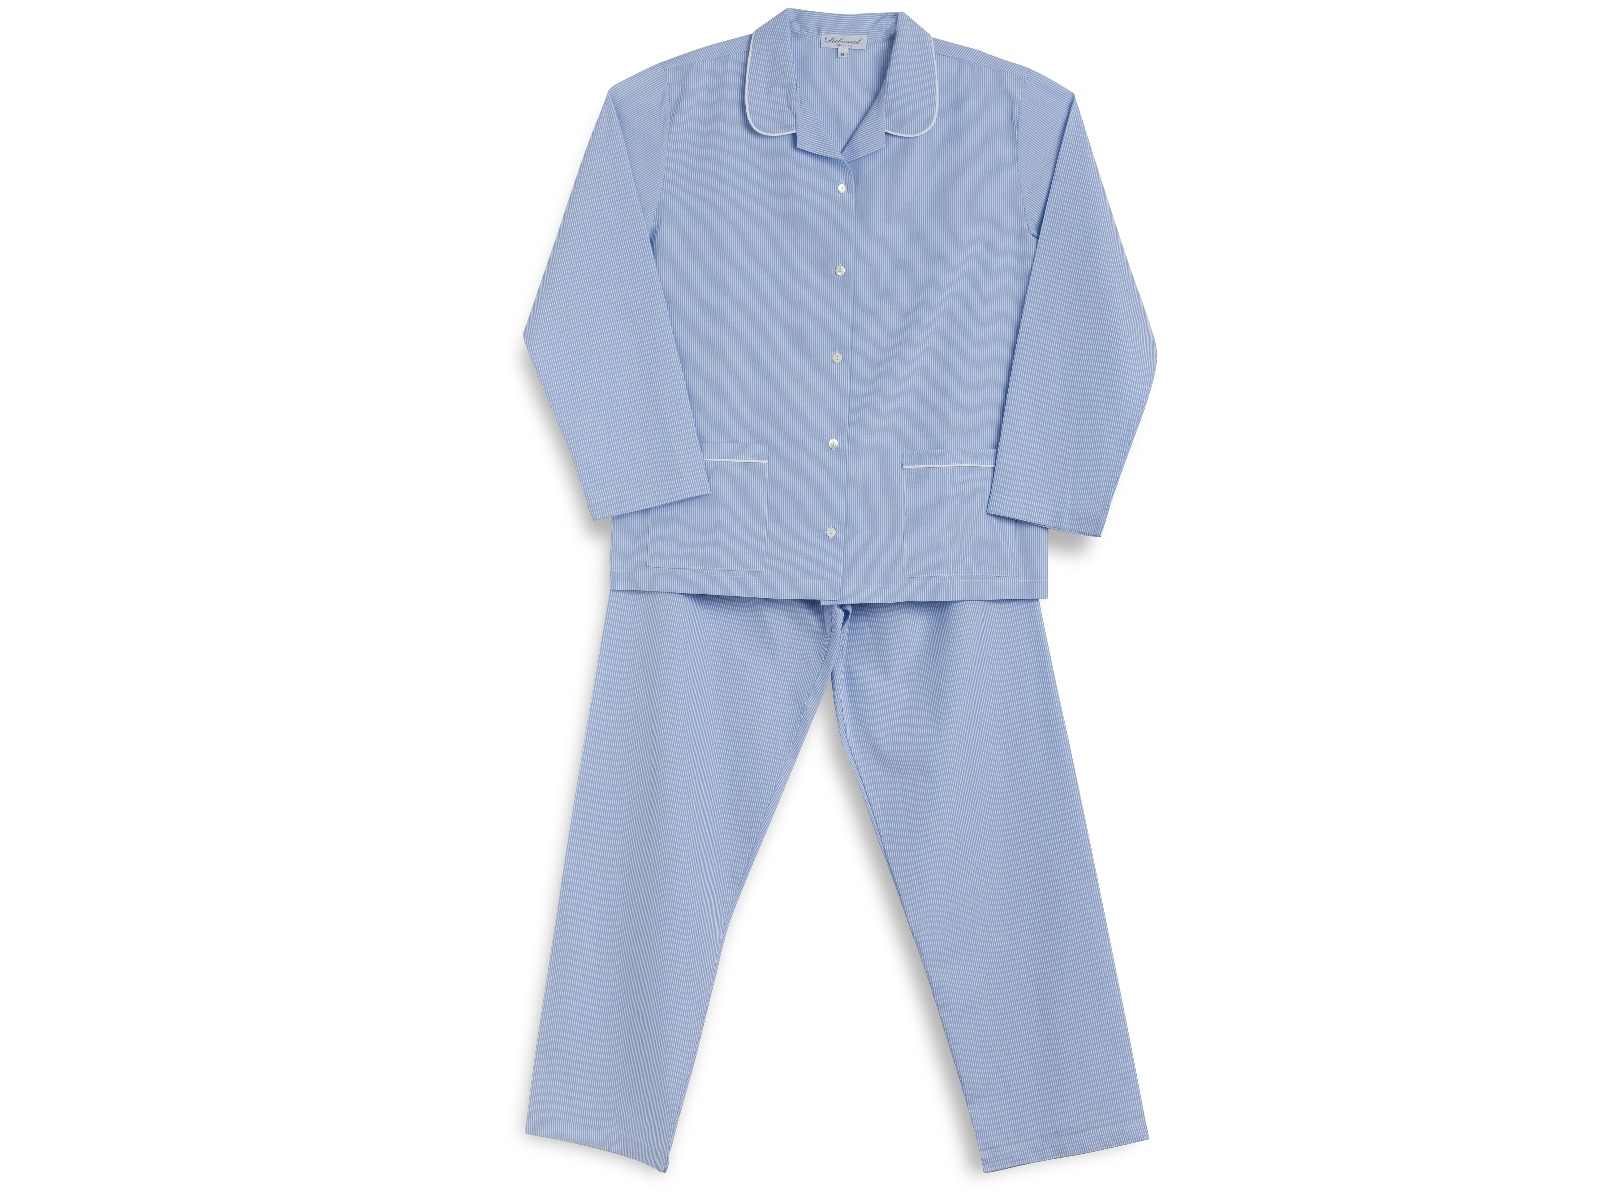 Siebaneck, i pigiami artigianali italiani: - Donna - mod. 1 bis Donna azzurro/bianco